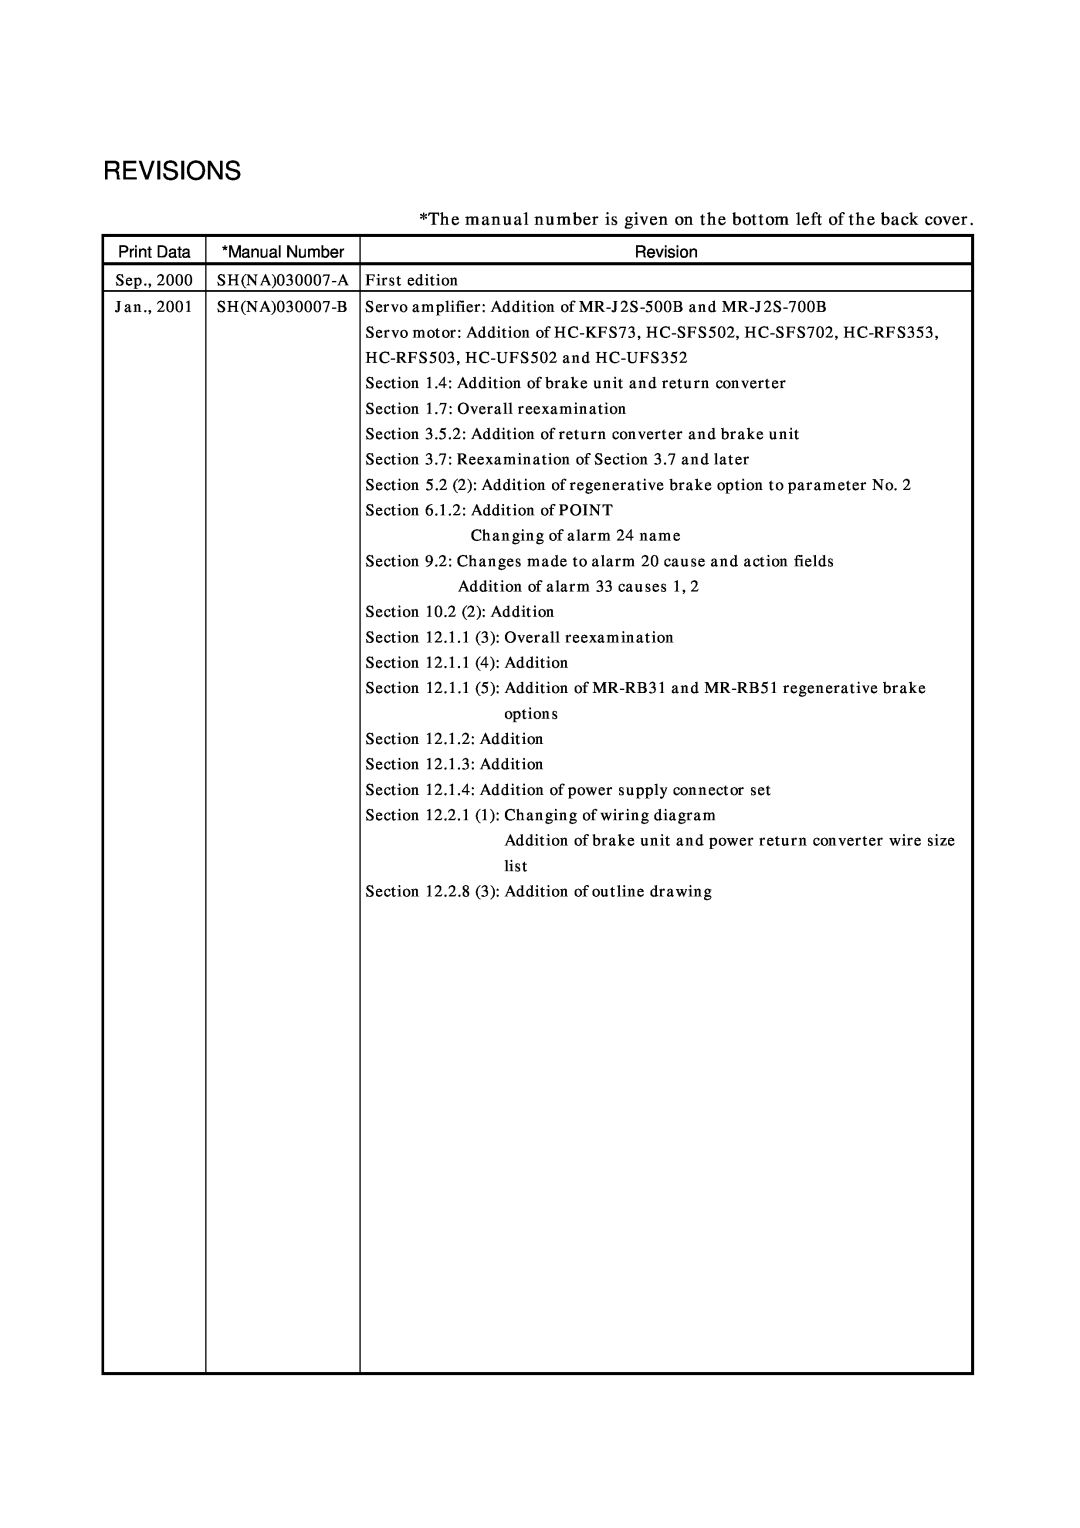 Bose MR-J2S- B instruction manual Revisions 